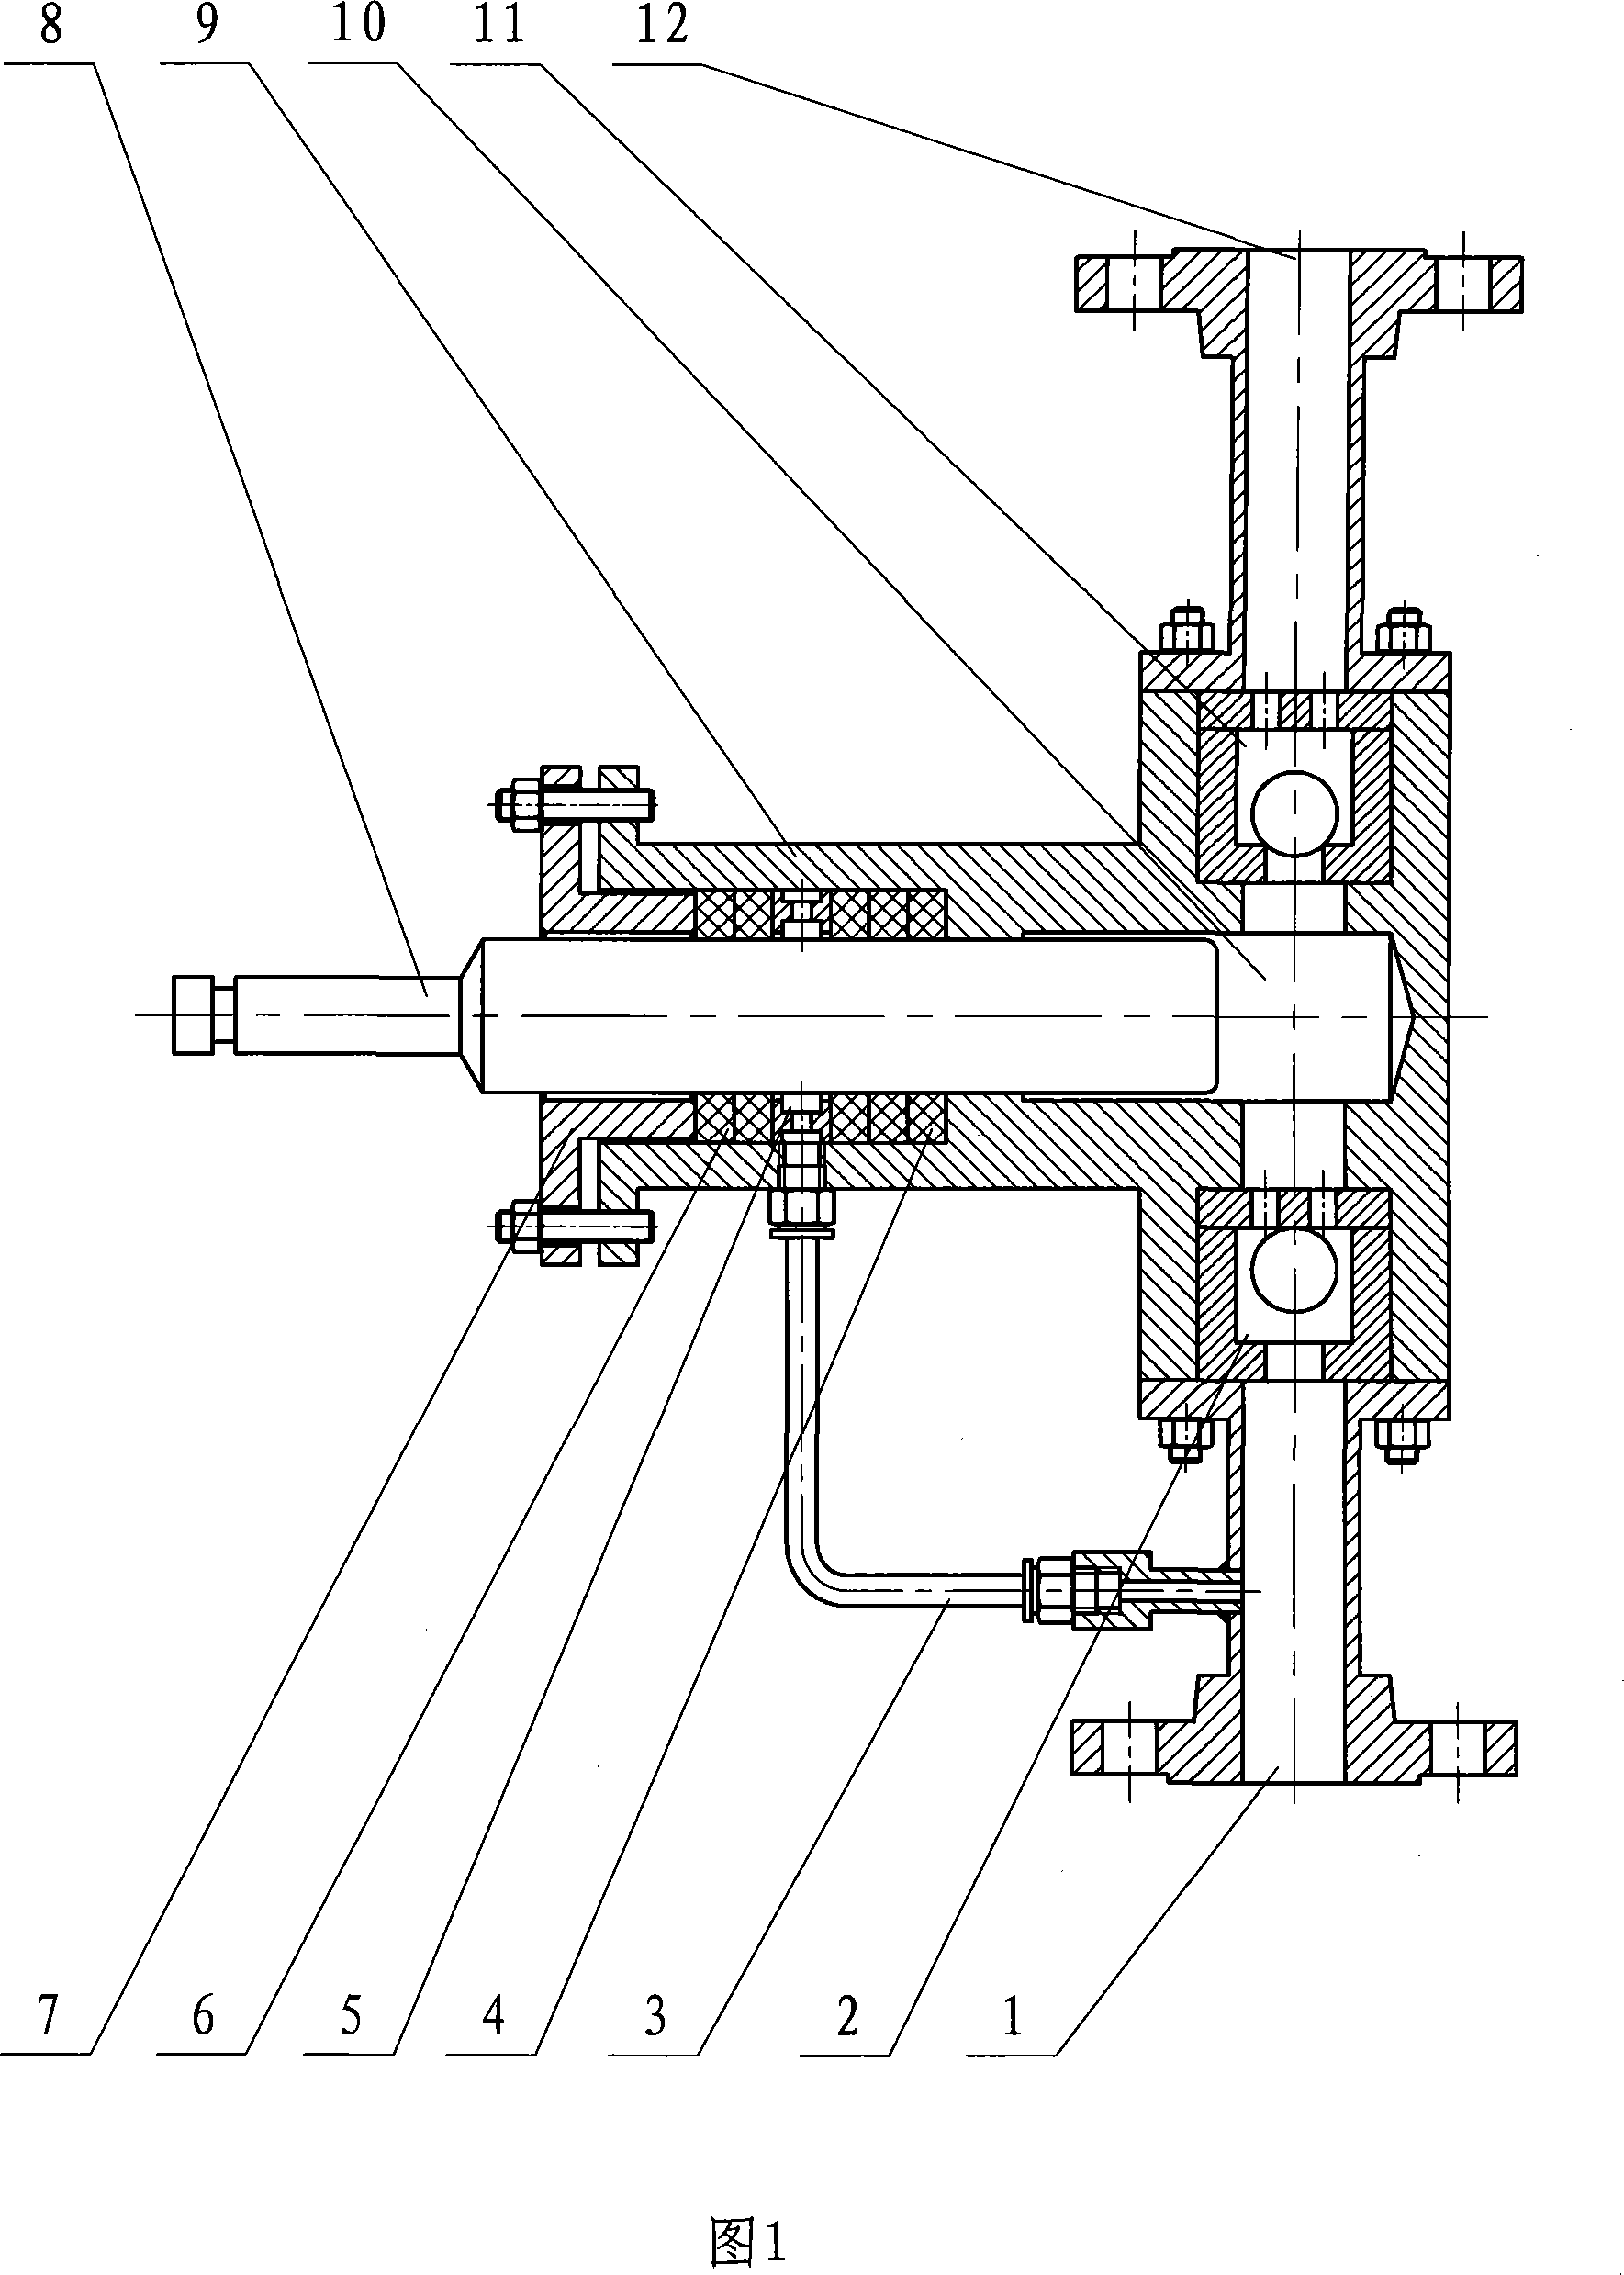 Non-leakage reversed flow type plunger pump